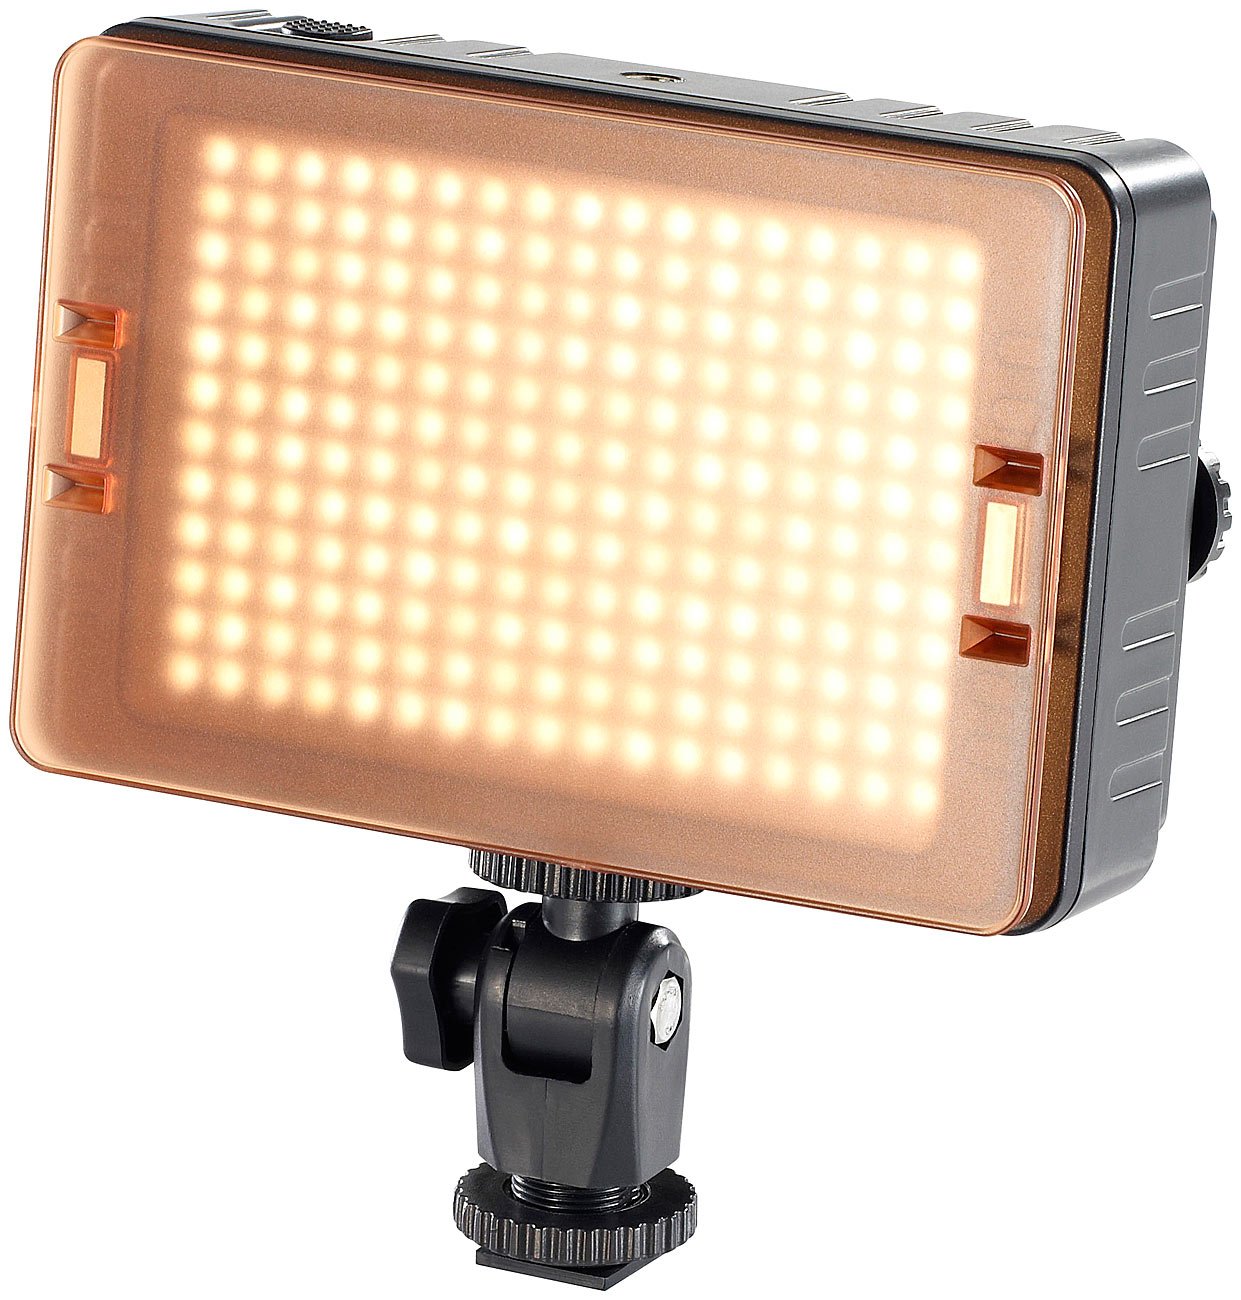 Somikon Fotoleuchte: Foto- und Videoleuchte FVL-1420.d mit 204 Tageslicht-LEDs (Video Leuchten, Videolampe, Lampe Fotografie)